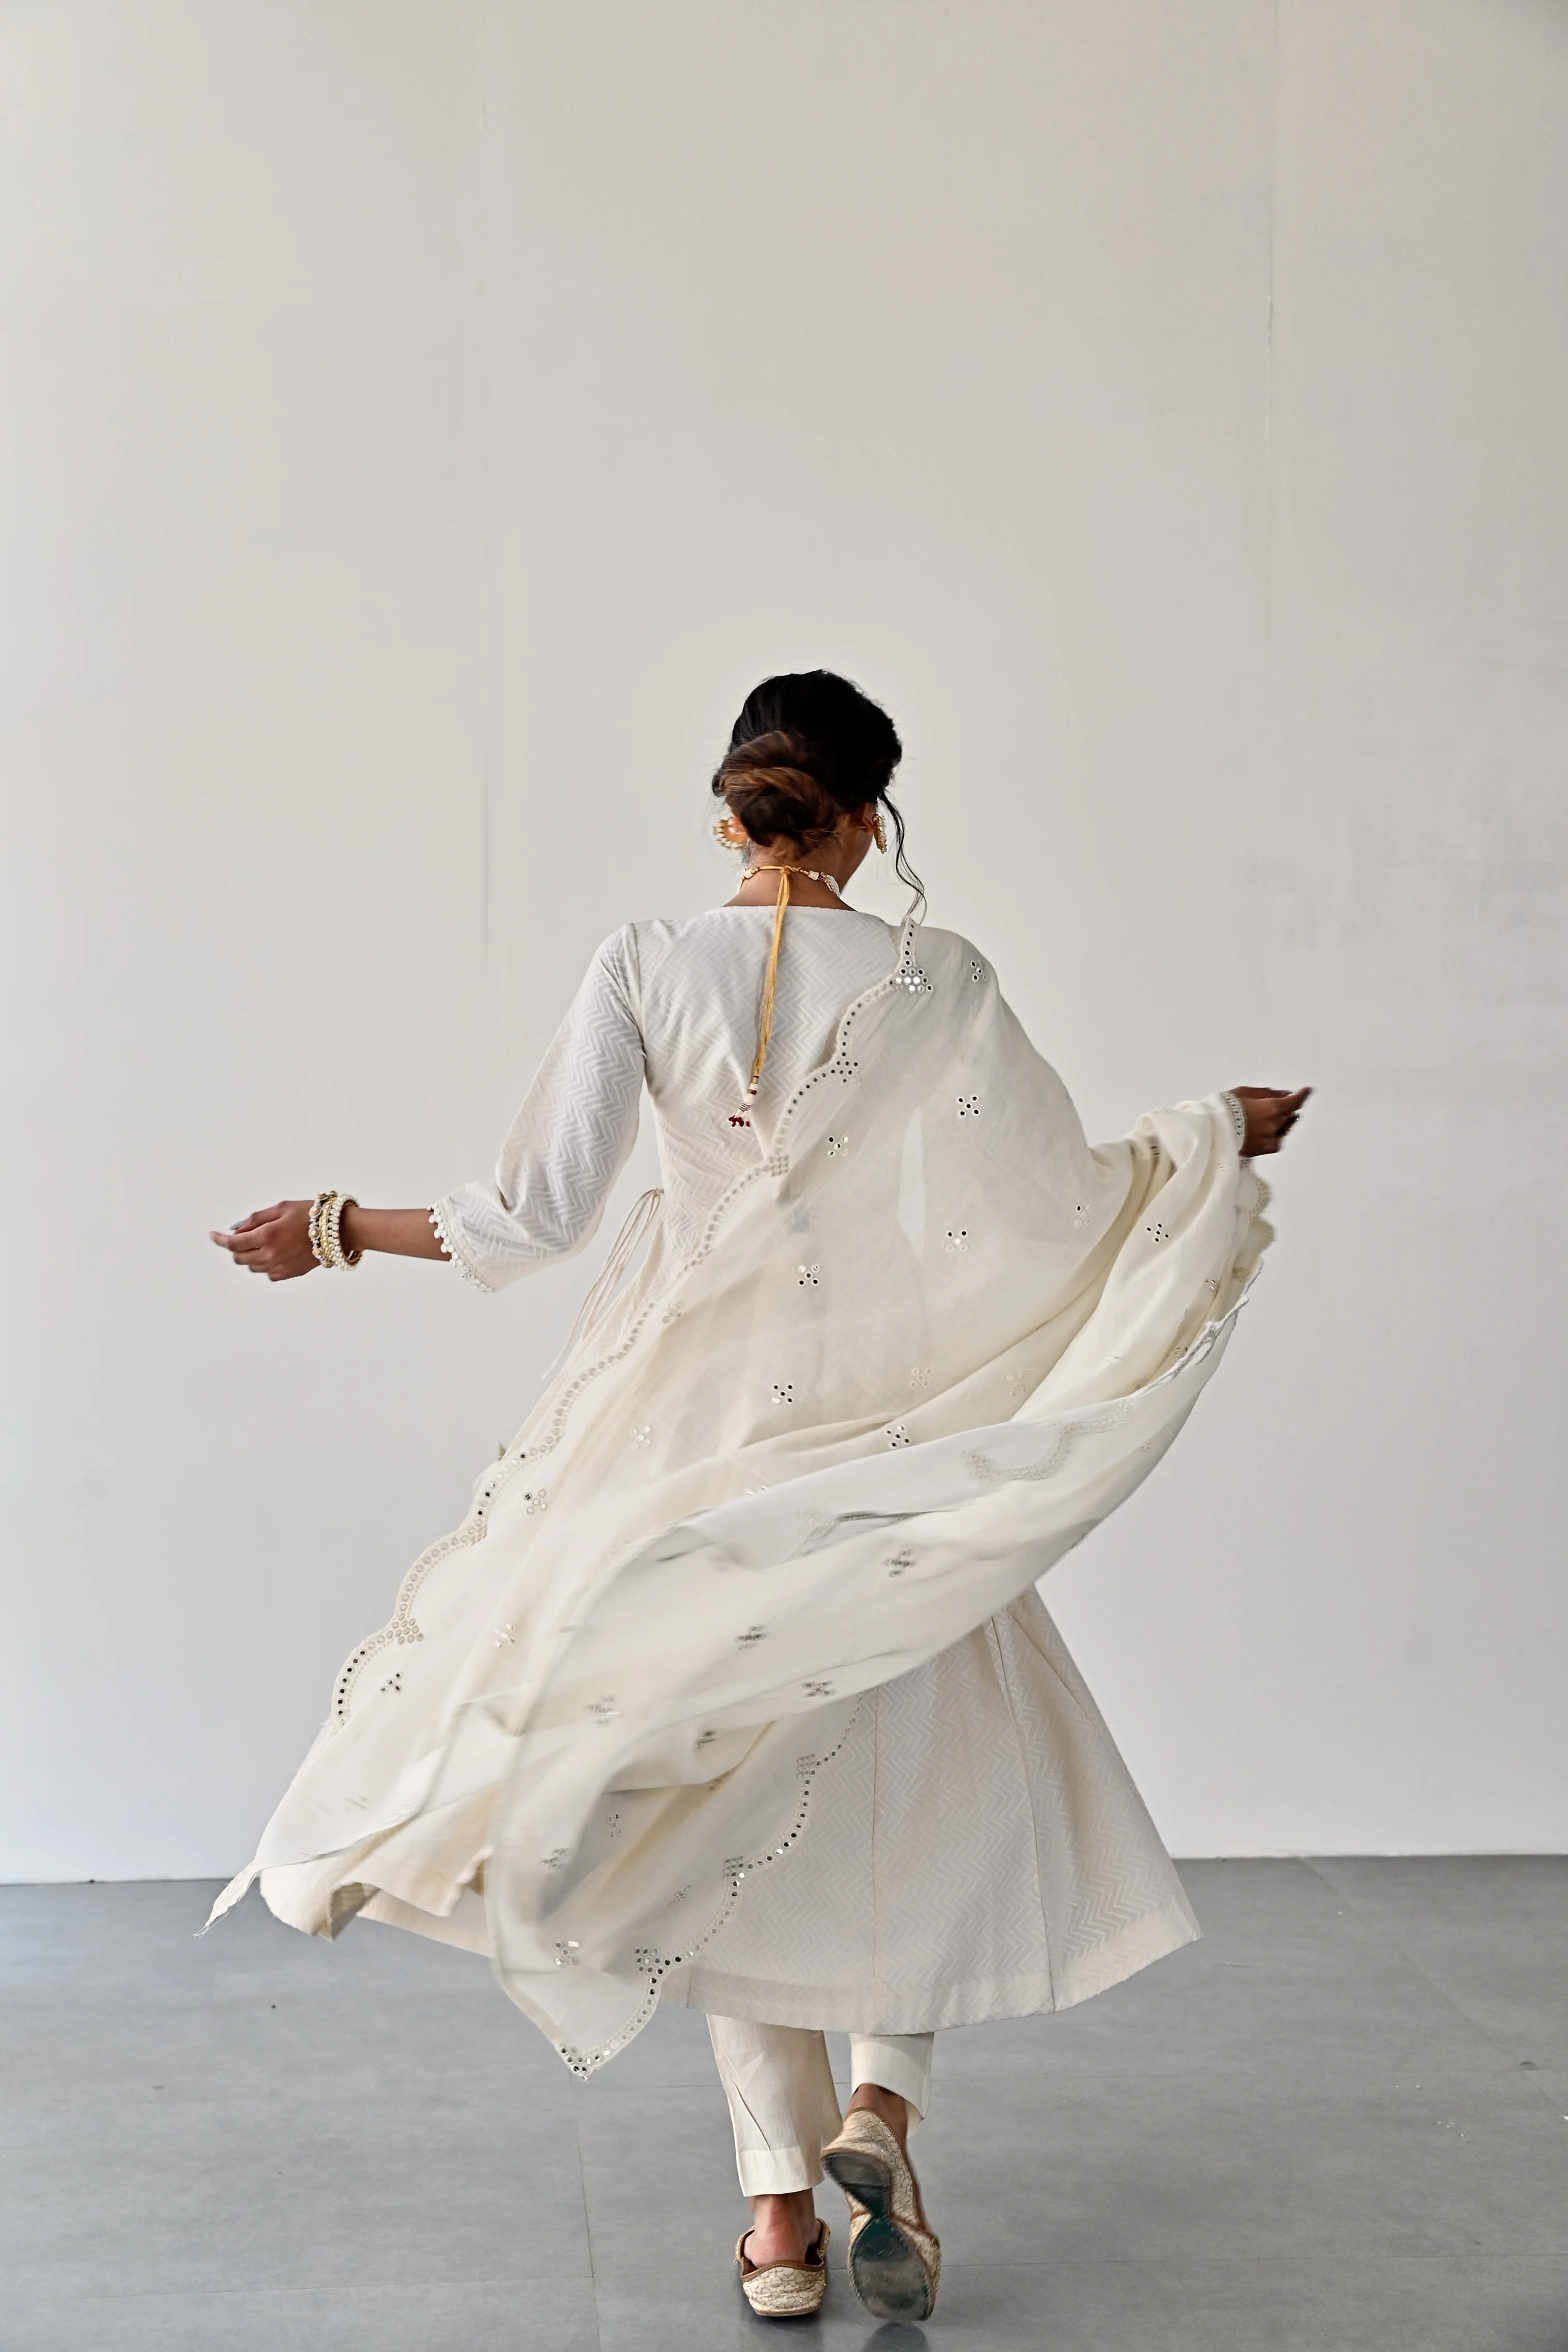 OFF-WHITE ANARKALI DRESS WITH SCALLOP DUPATTA